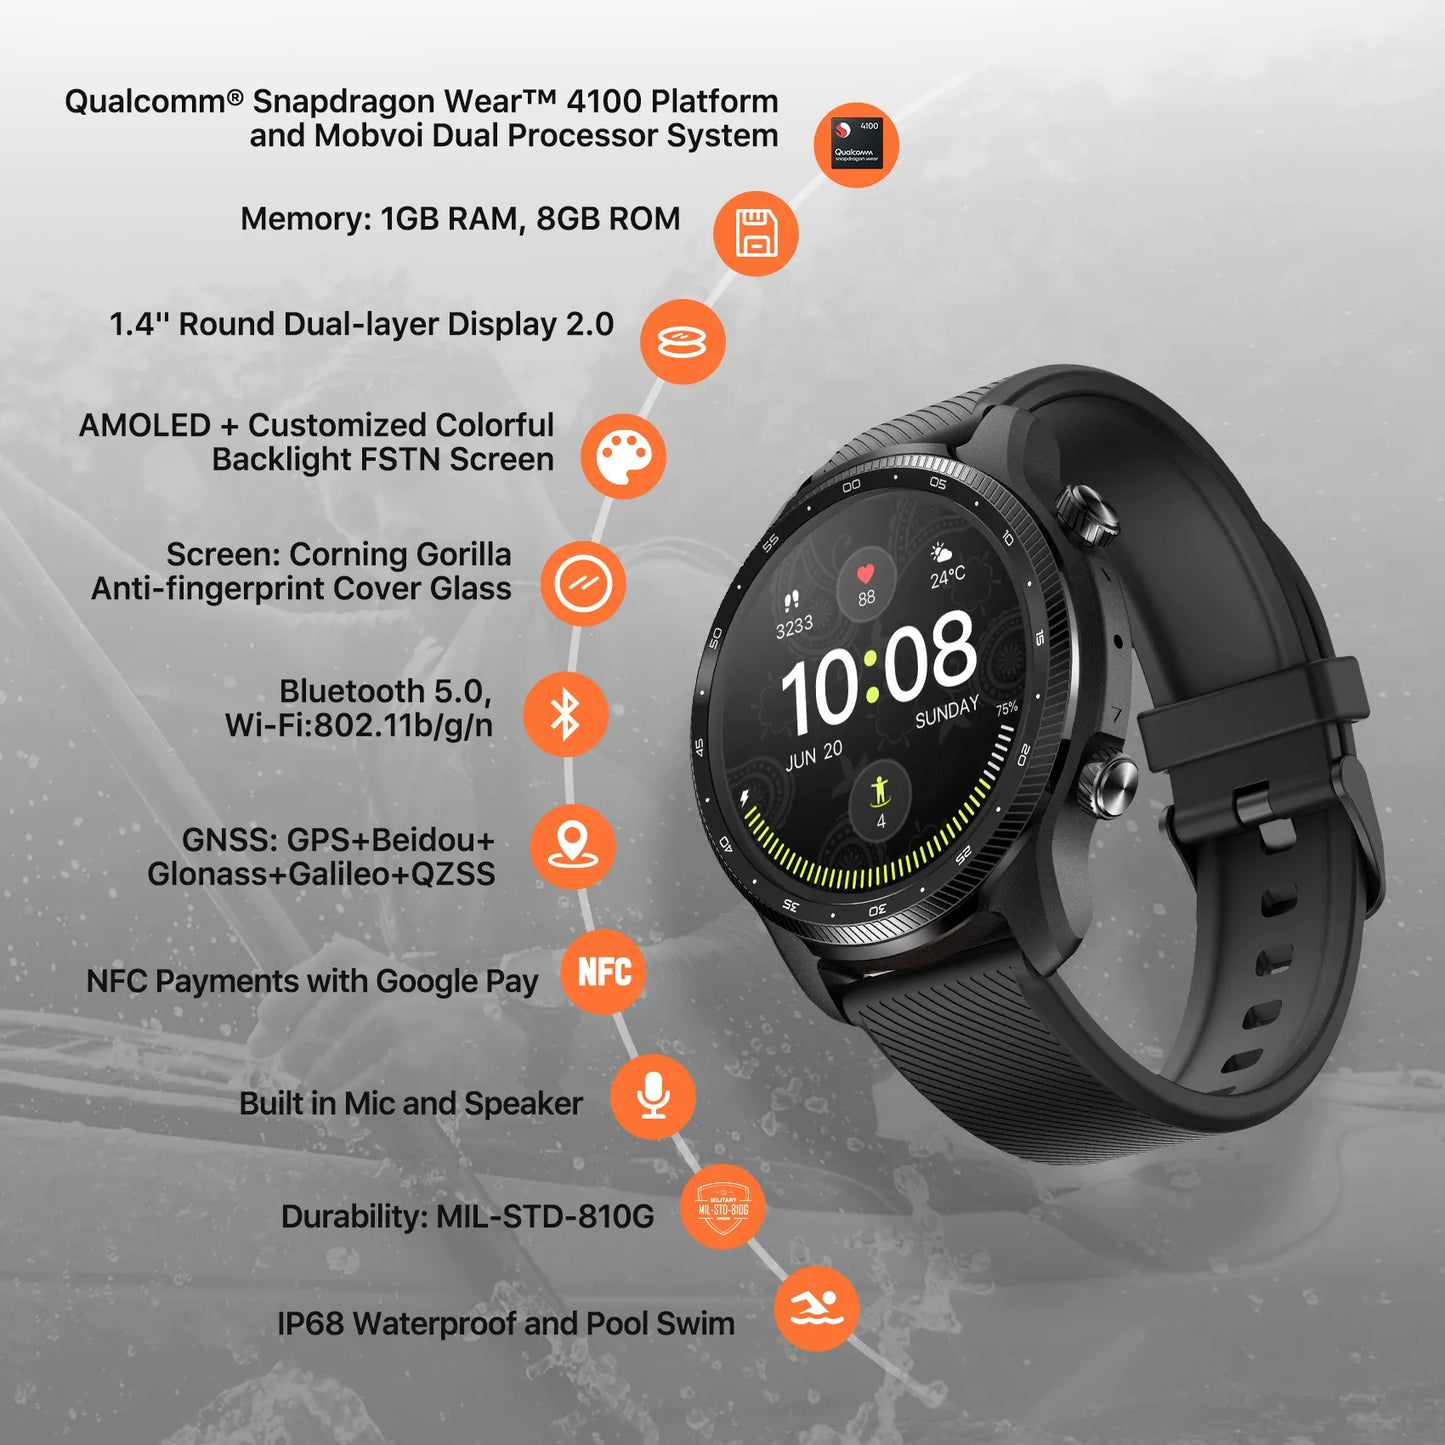 TicWatch Pro 3 Ultra GPS-Smartwatch